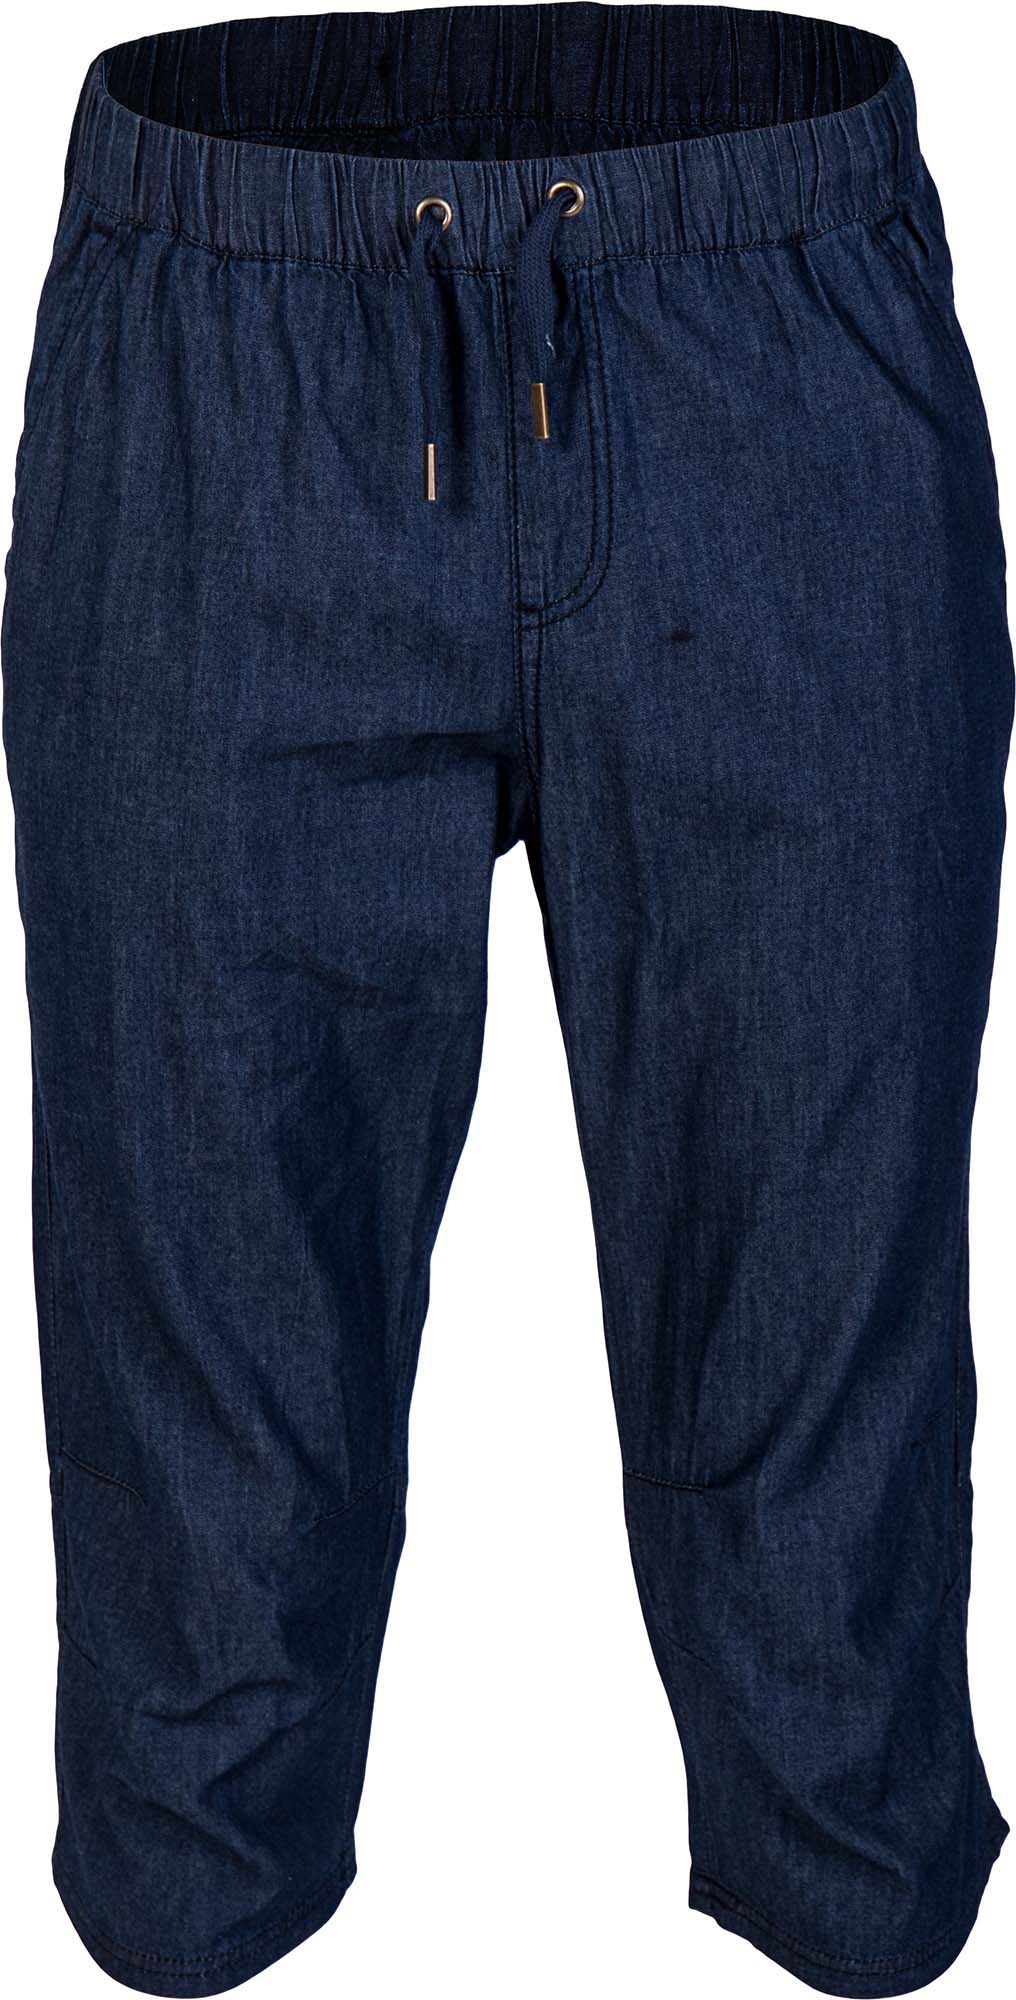 Men’s 3/4 length trousers